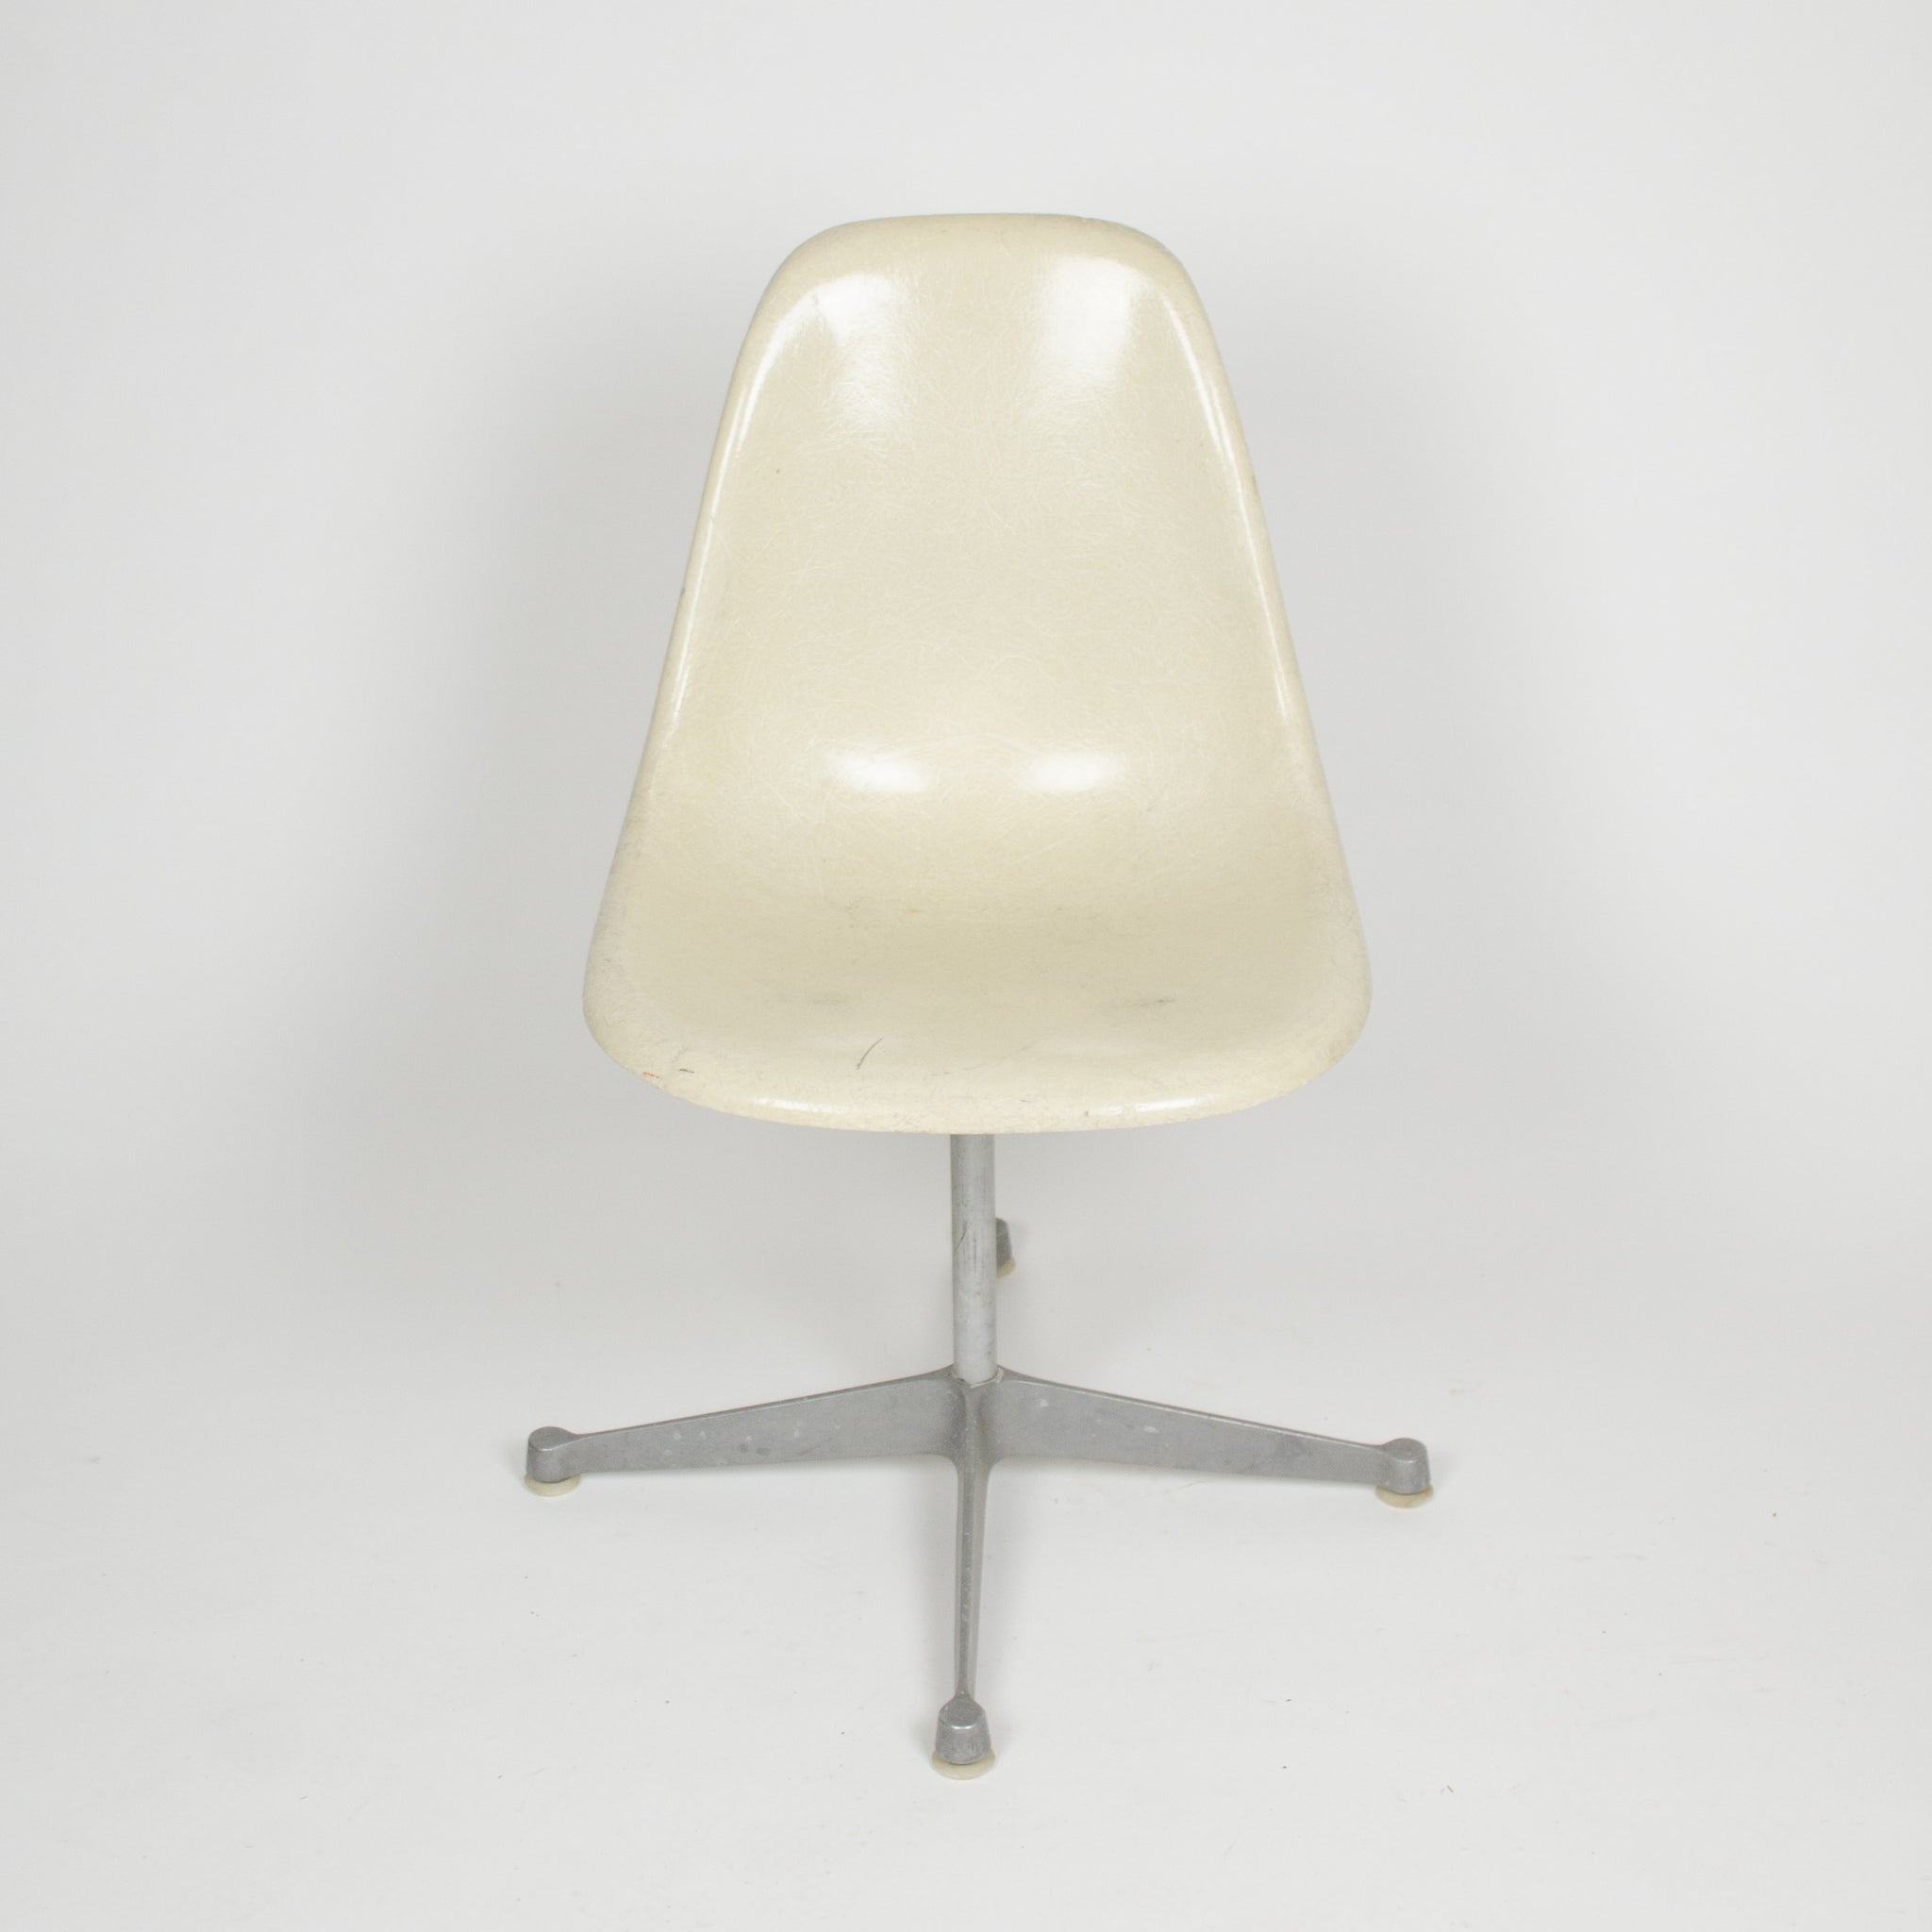 SOLD Eames Herman Miller Ivory Fiberglass Side Shell Chair